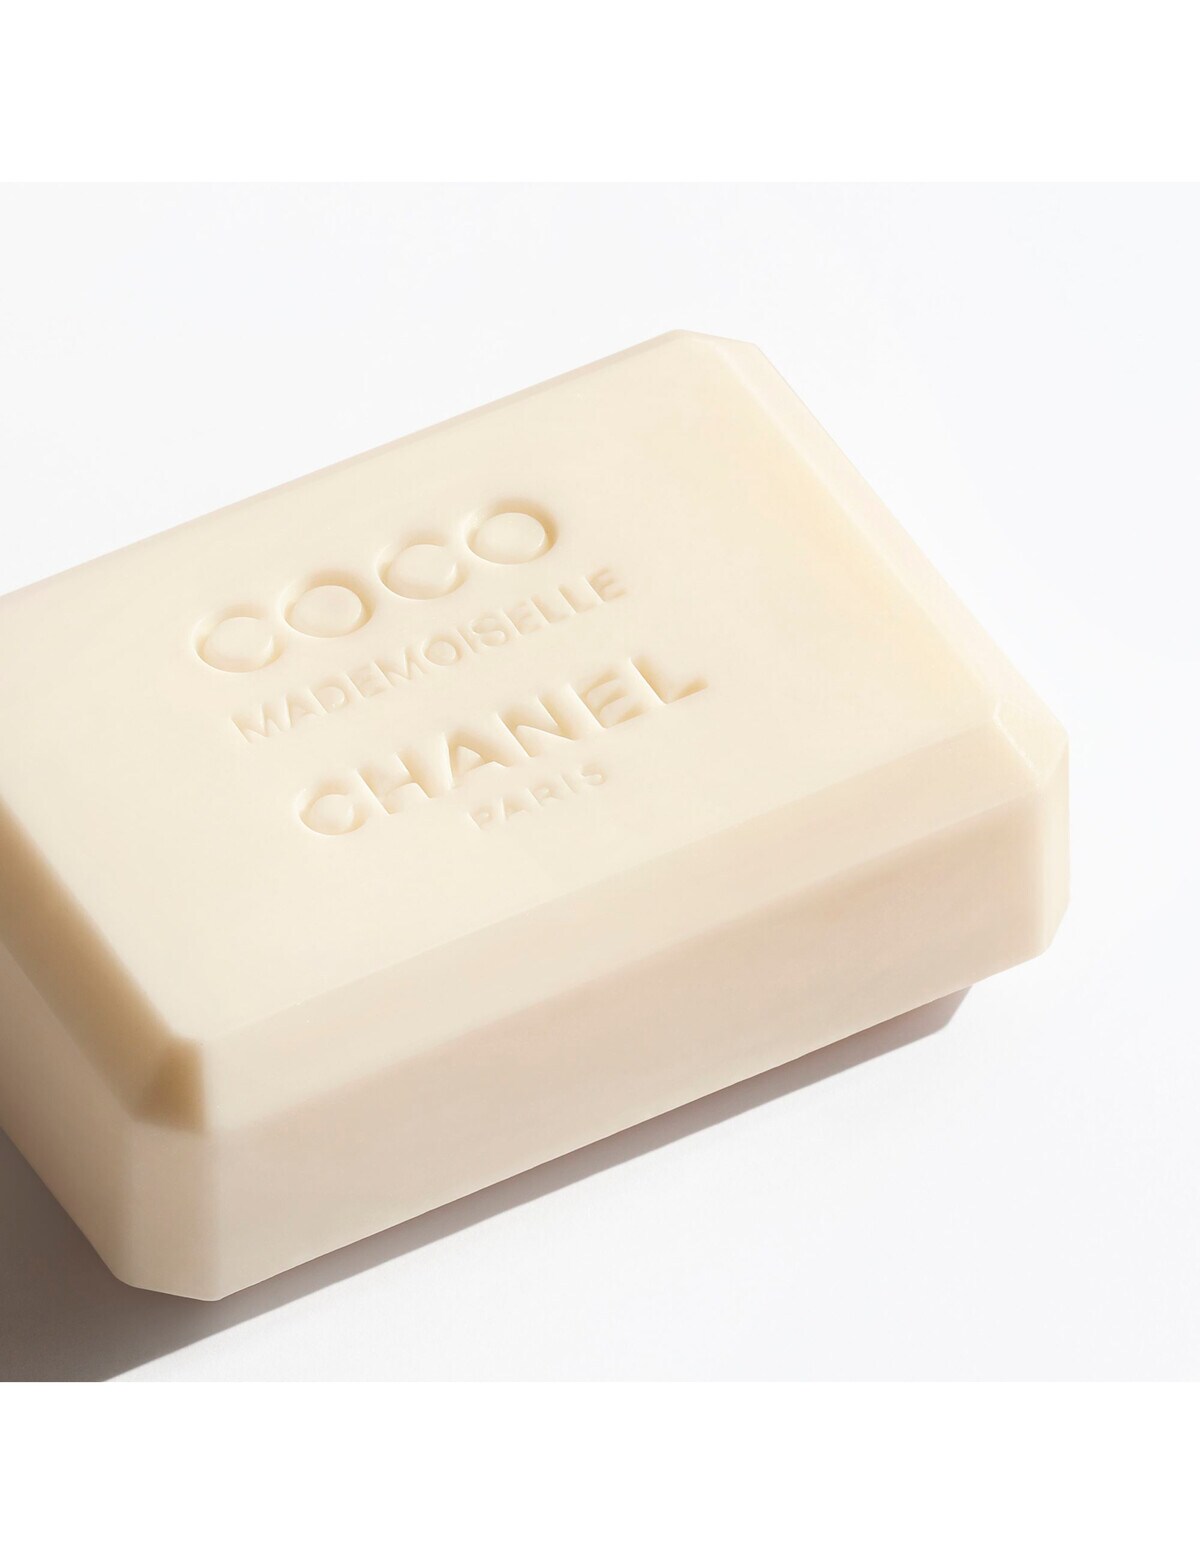 CHANEL COCO MADEMOISELLE Fresh Bath Soap 150g - COCO MADEMOISELLE